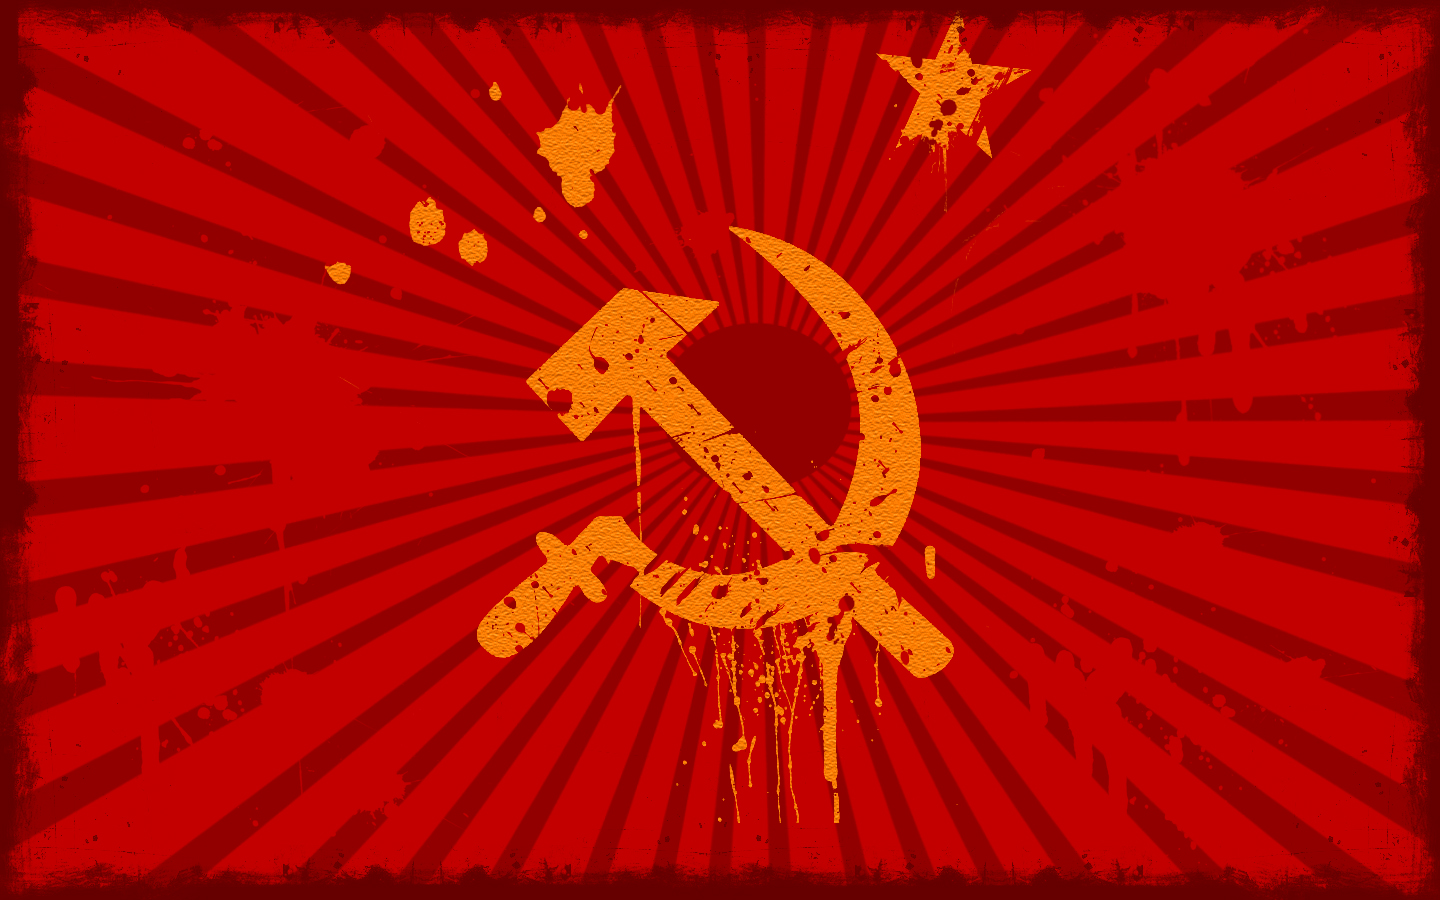 Soviet Grunge Wallpaper By Robin0999